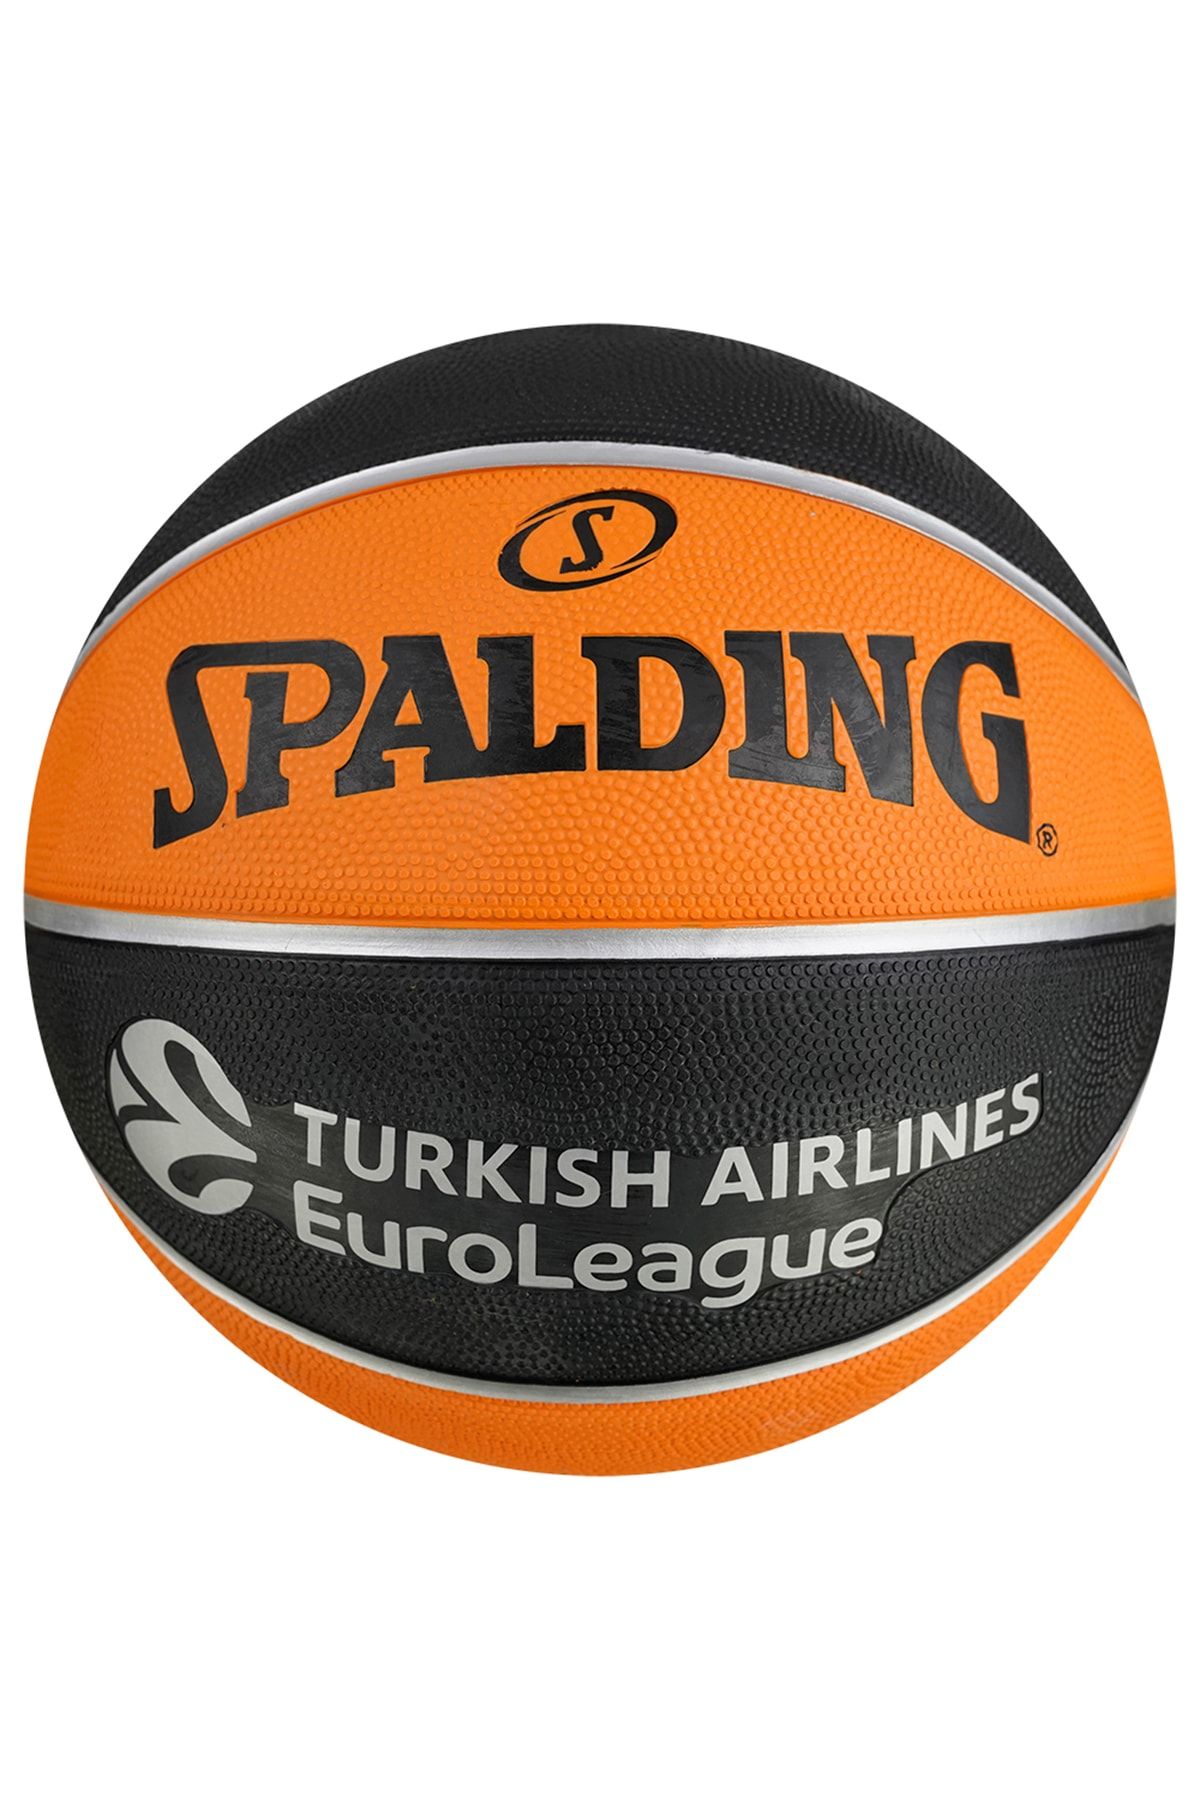 Spalding Tf150 Varsity Euroleague Kauçuk 6 No Basketbol Topu